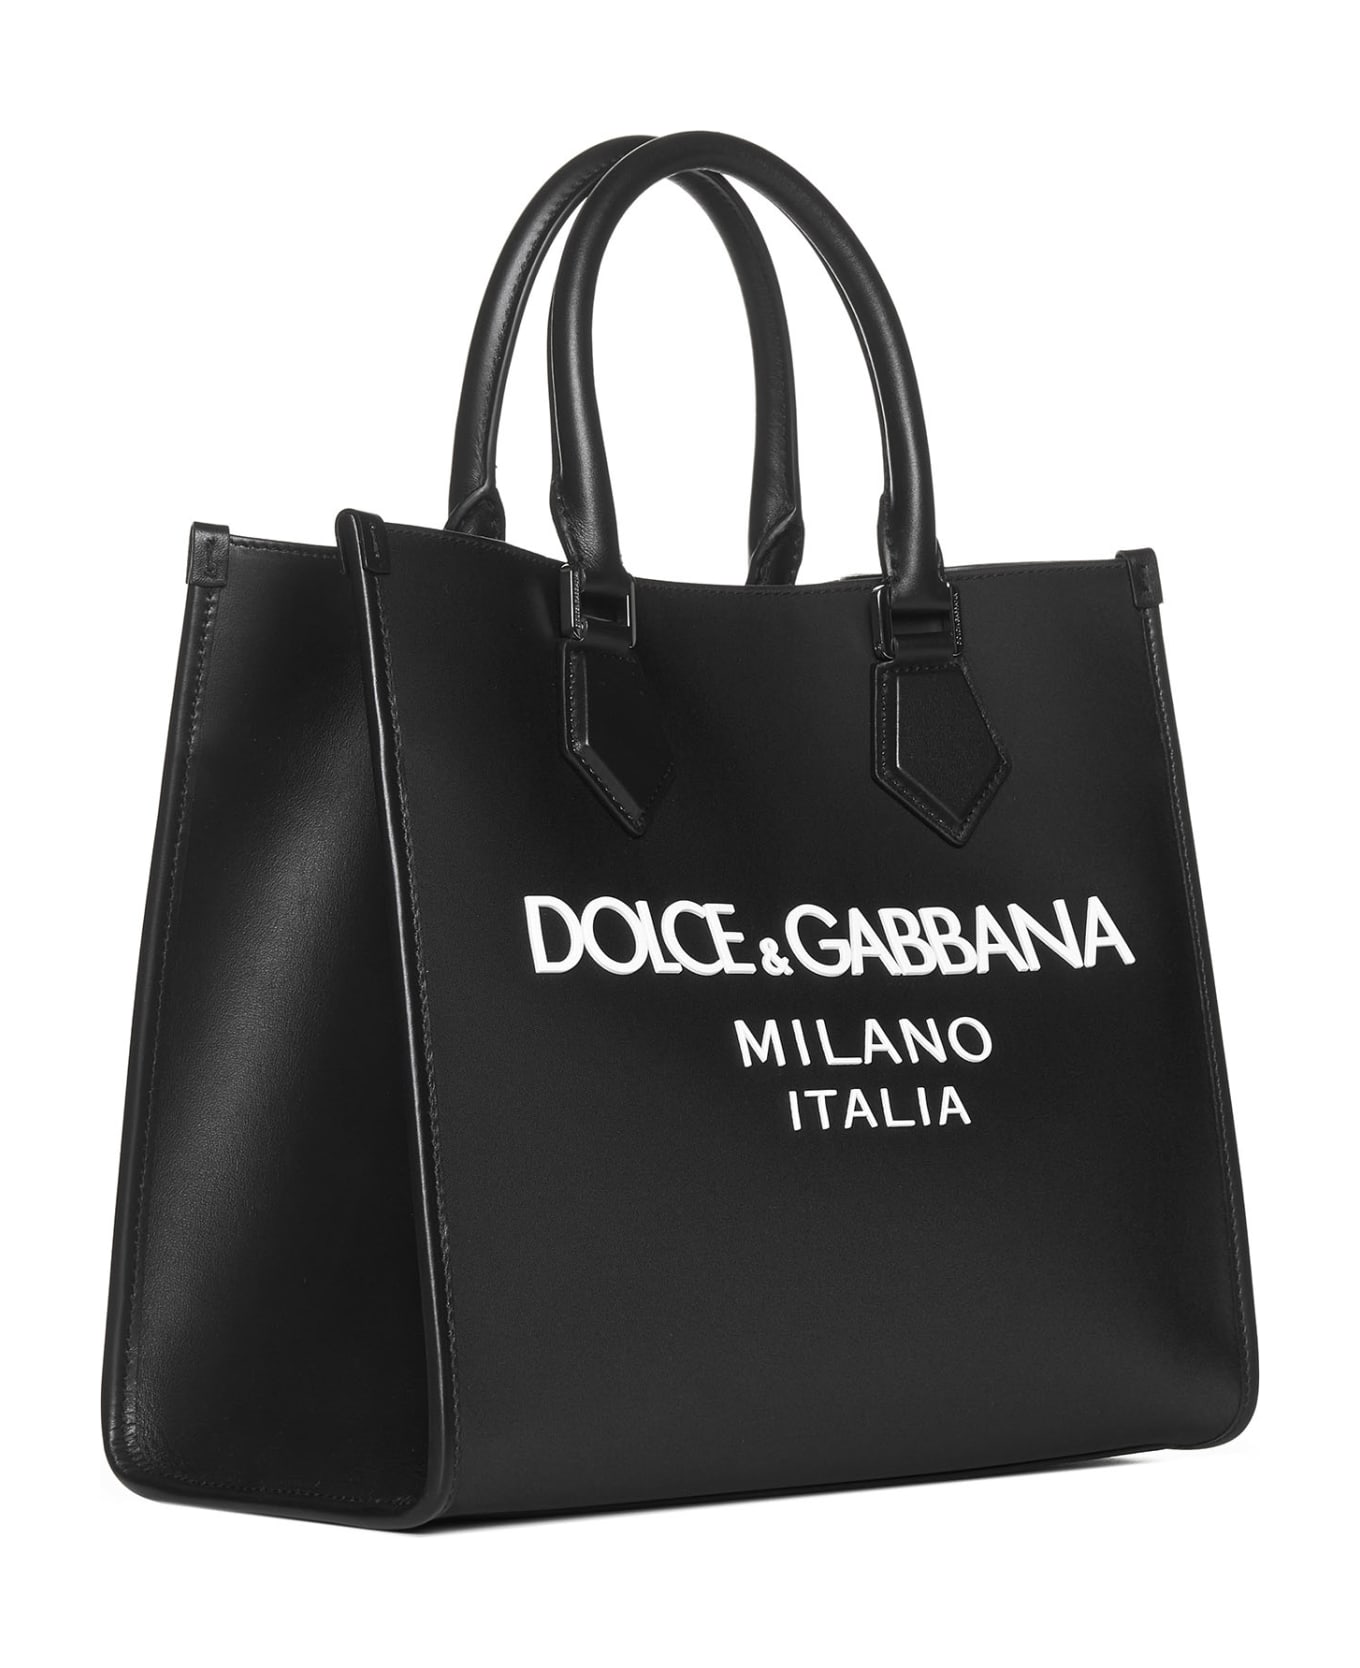 Dolce & Gabbana Logo Shopping Bag - Nero/nero トートバッグ